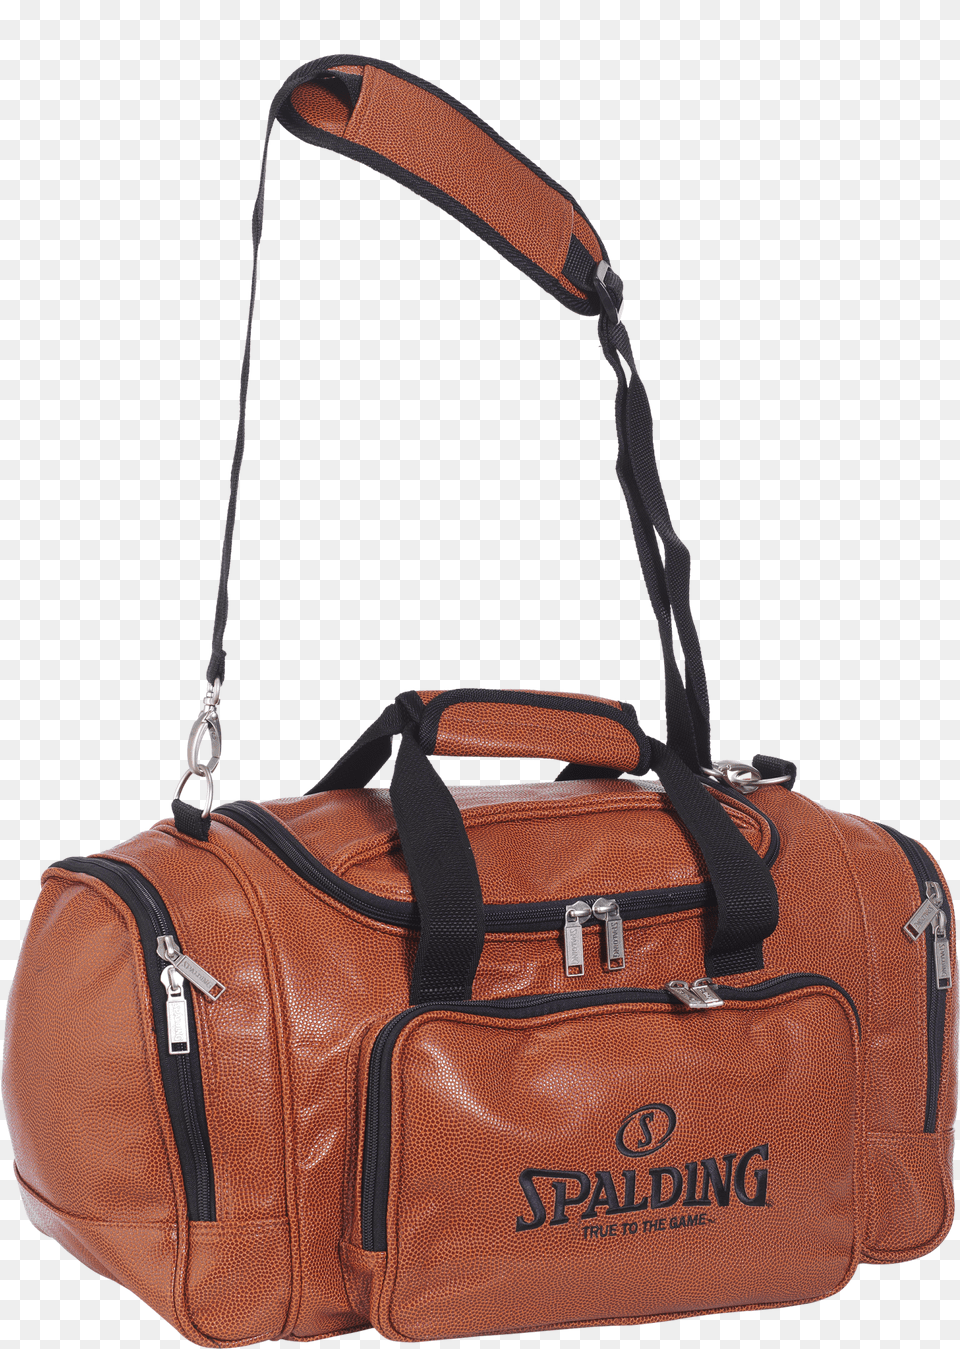 Spalding Basketball Duffle Bag Satchel, Accessories, Handbag, Purse Png Image